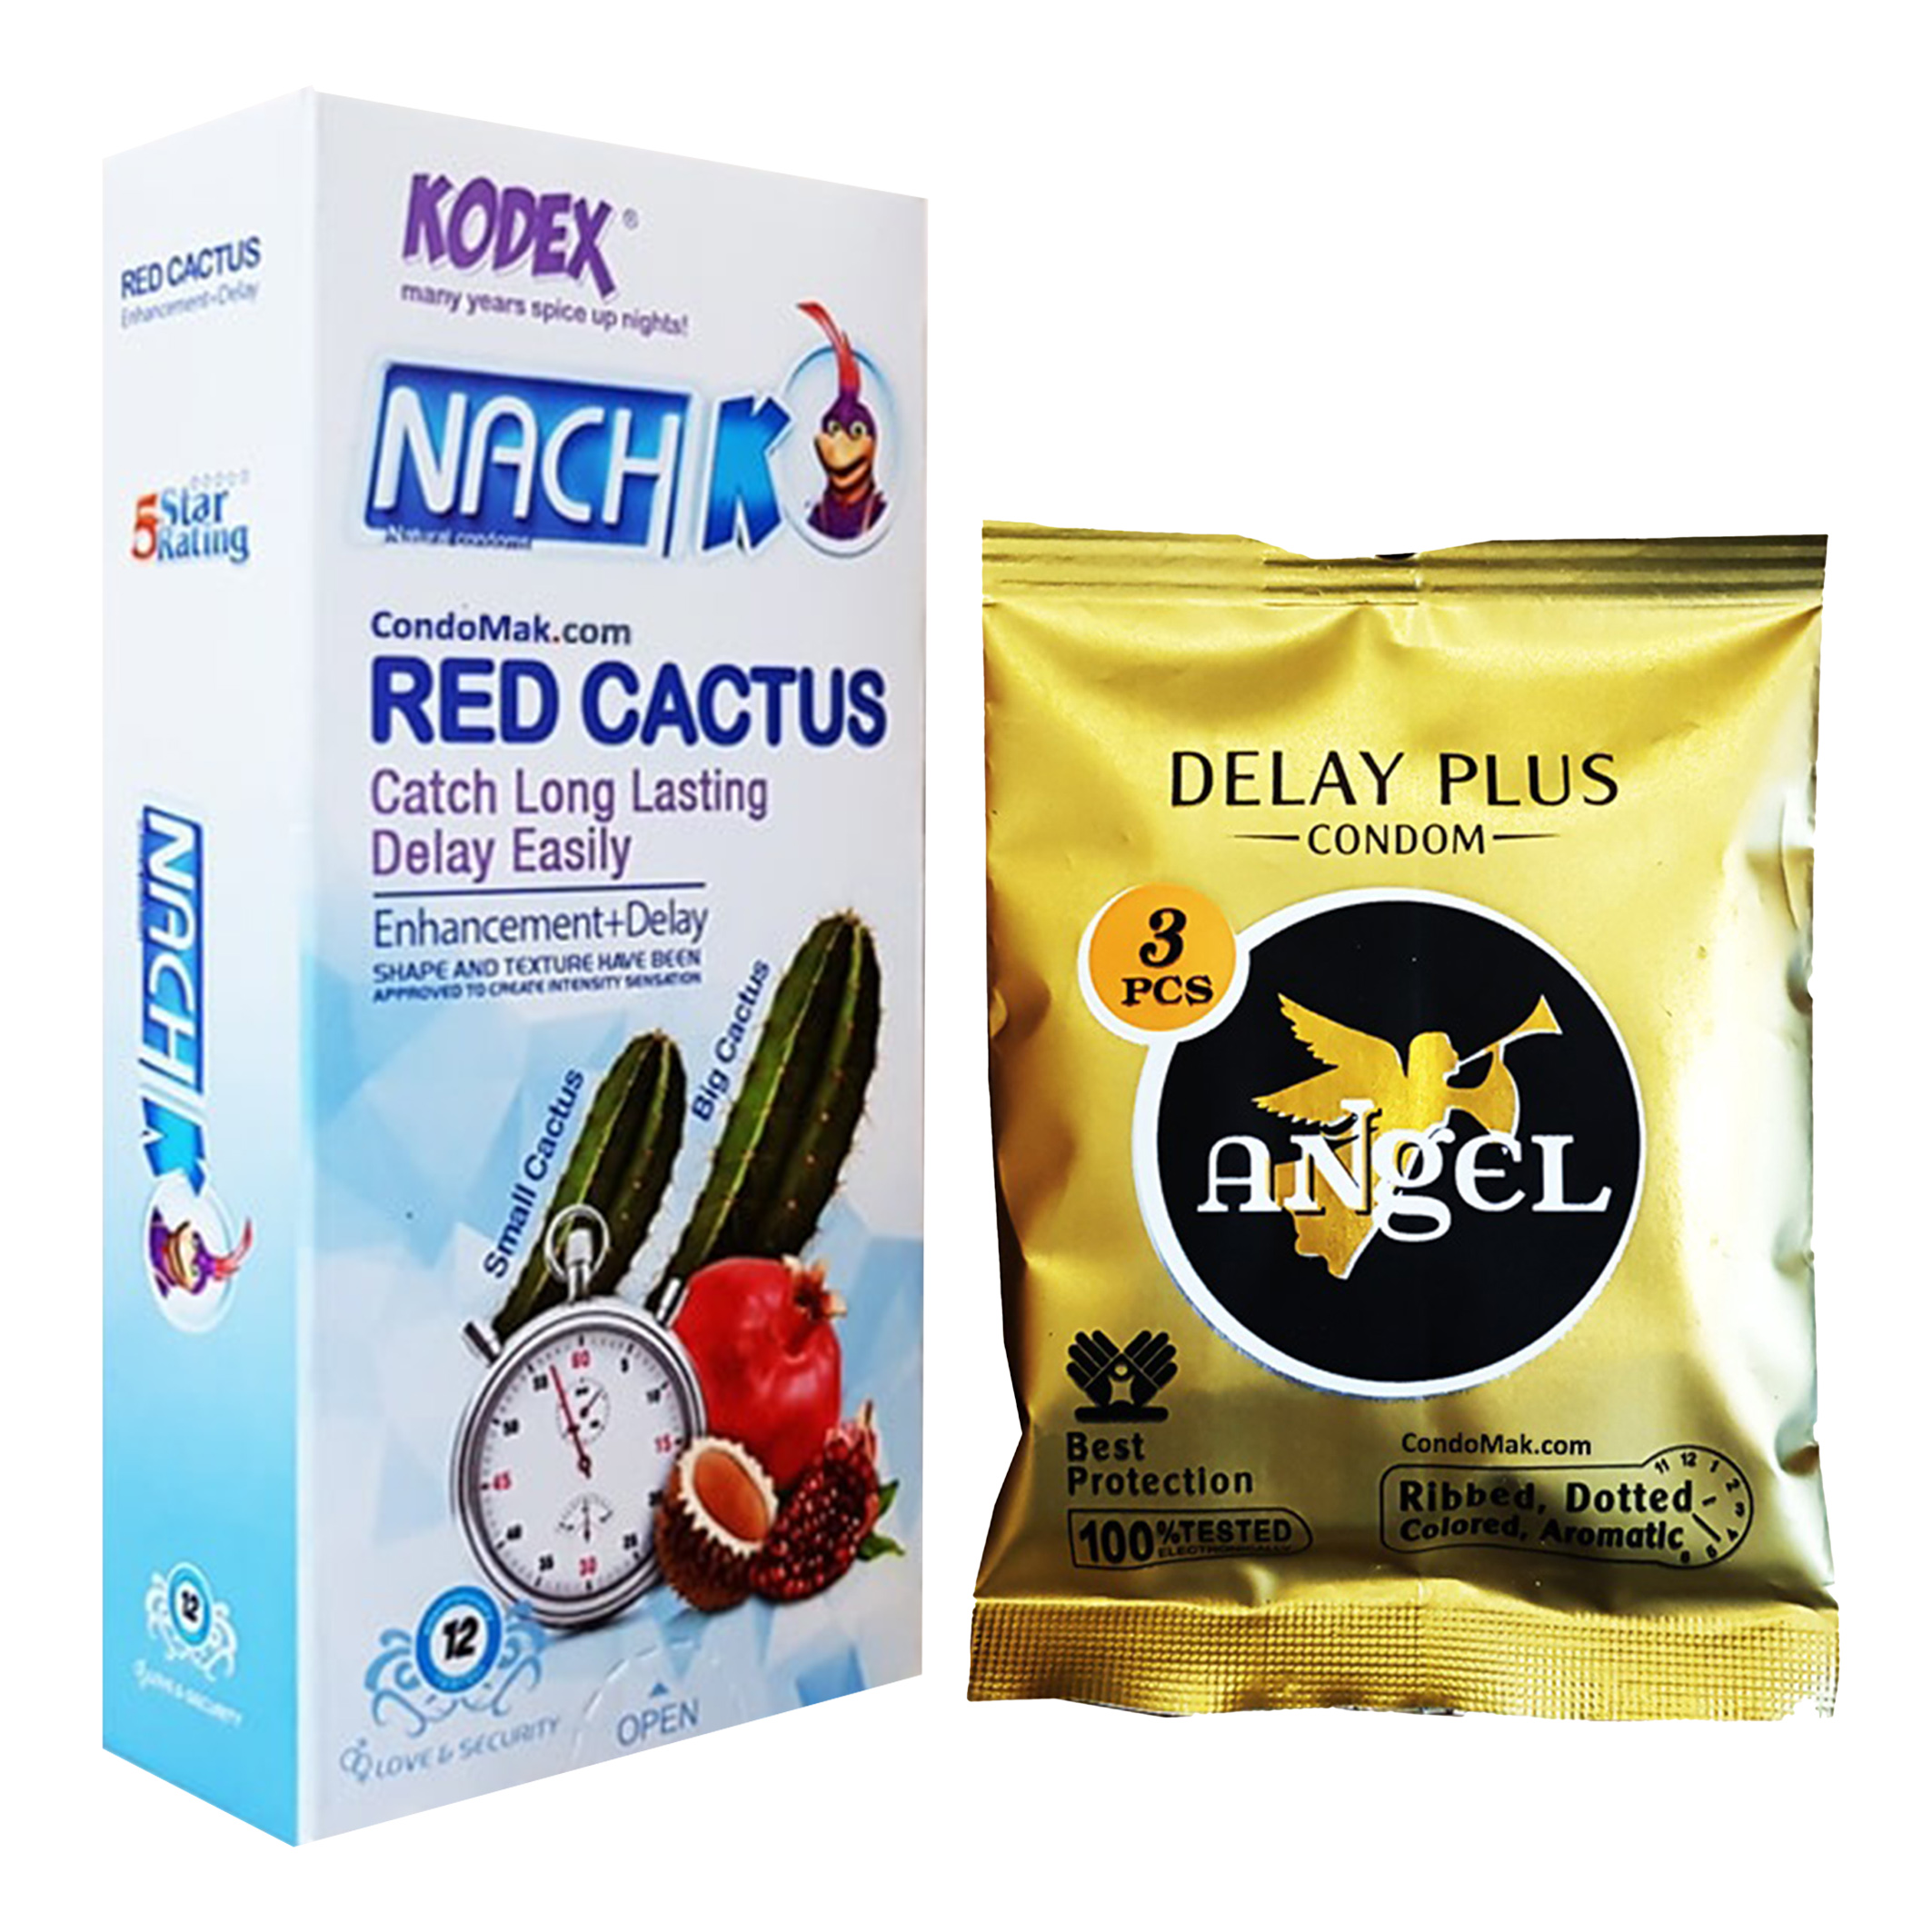 کاندوم ناچ کدکس مدل RED CACTUS بسته 12 عددی به همراه کاندوم انجل مدل DELAY PLUS بسته 3 عددی